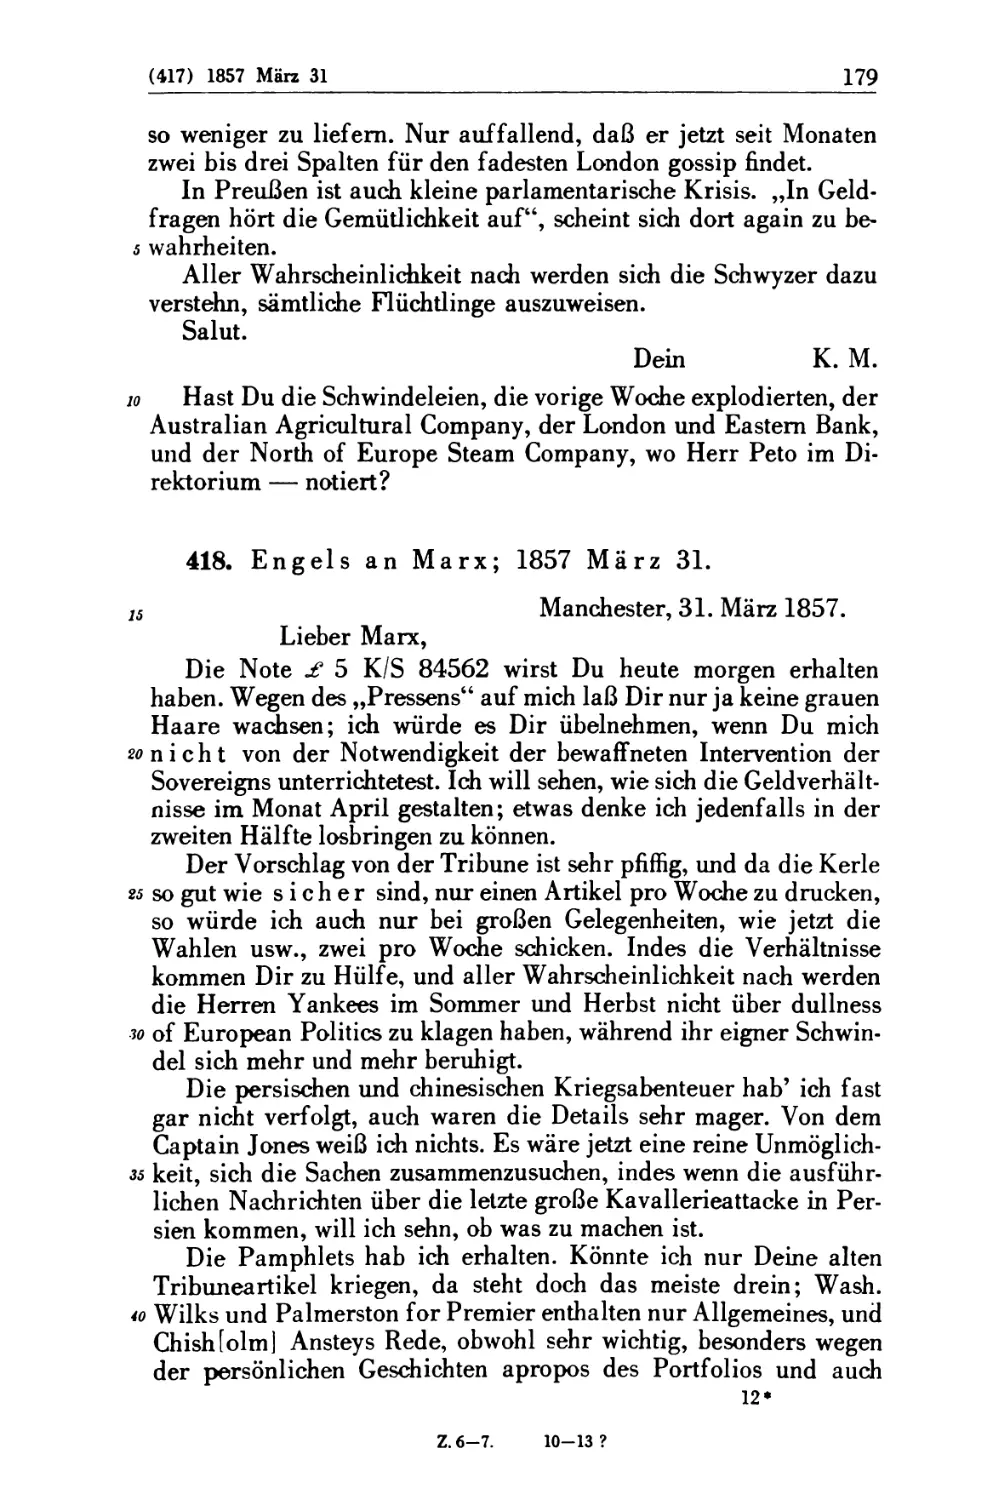 418. Engels an Marx; 1857 März 31